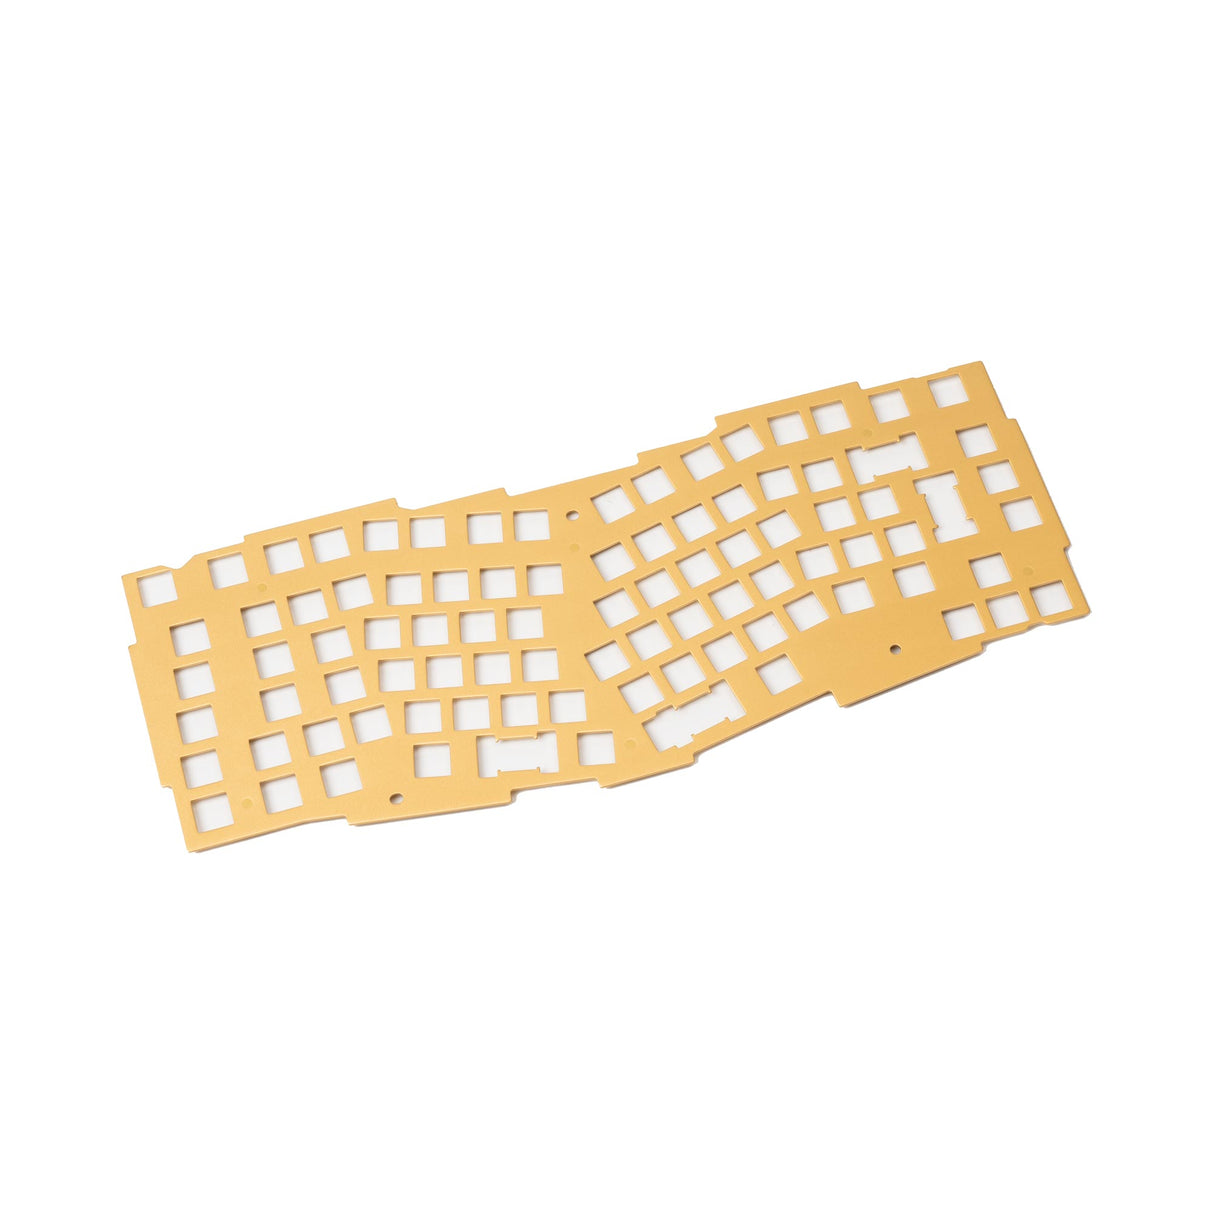 Keychron Q10 Keyboard ISO Layout Brass Plate